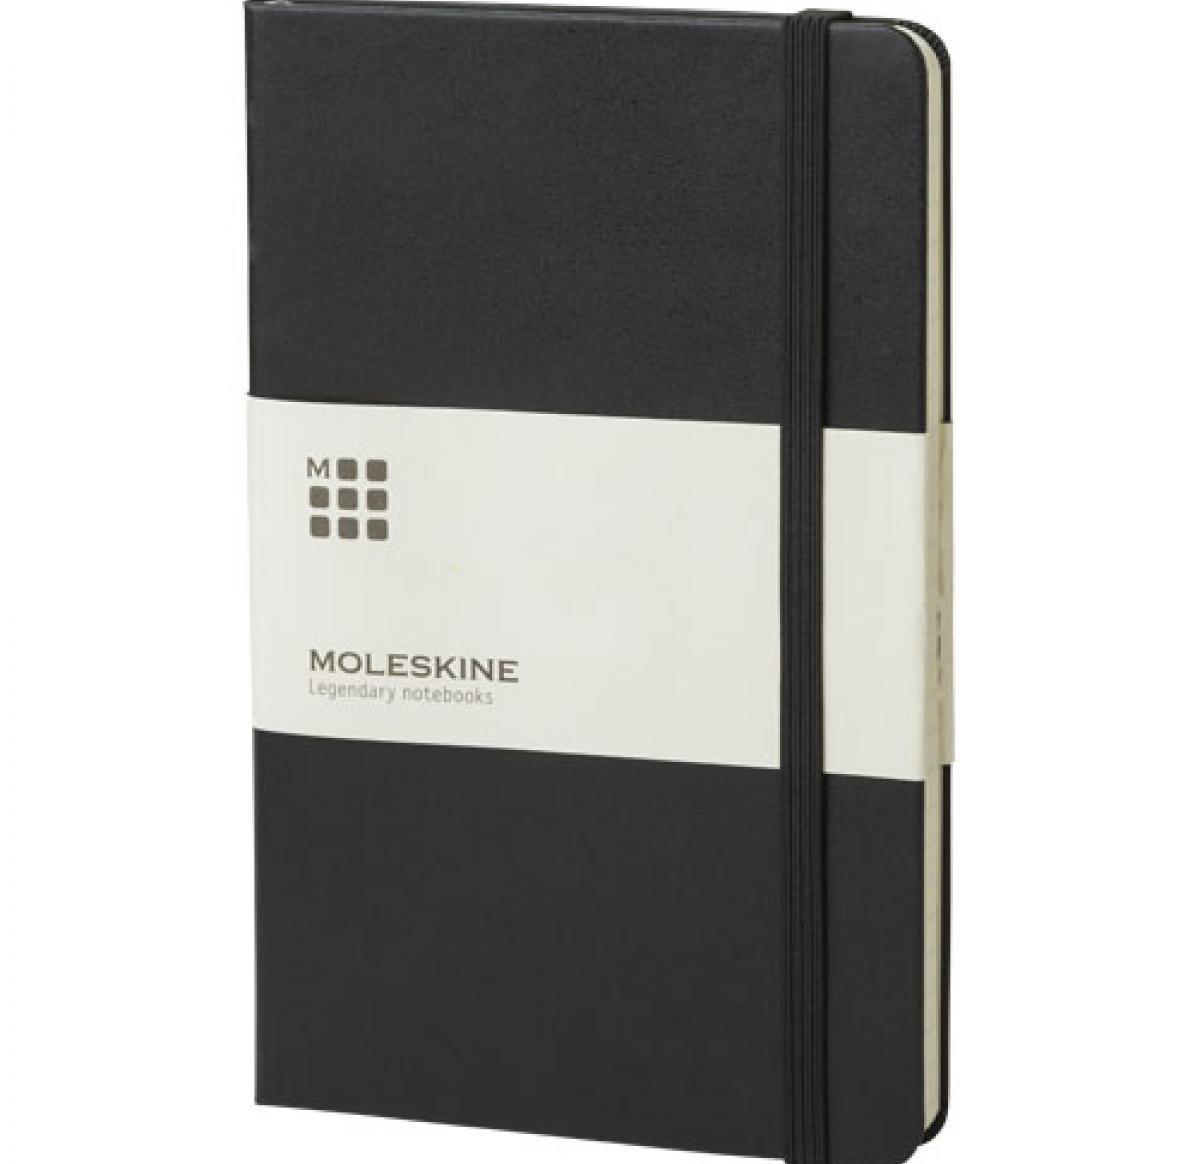 Custom Moleskine Classic L Hard Cover Notebooks - Plain